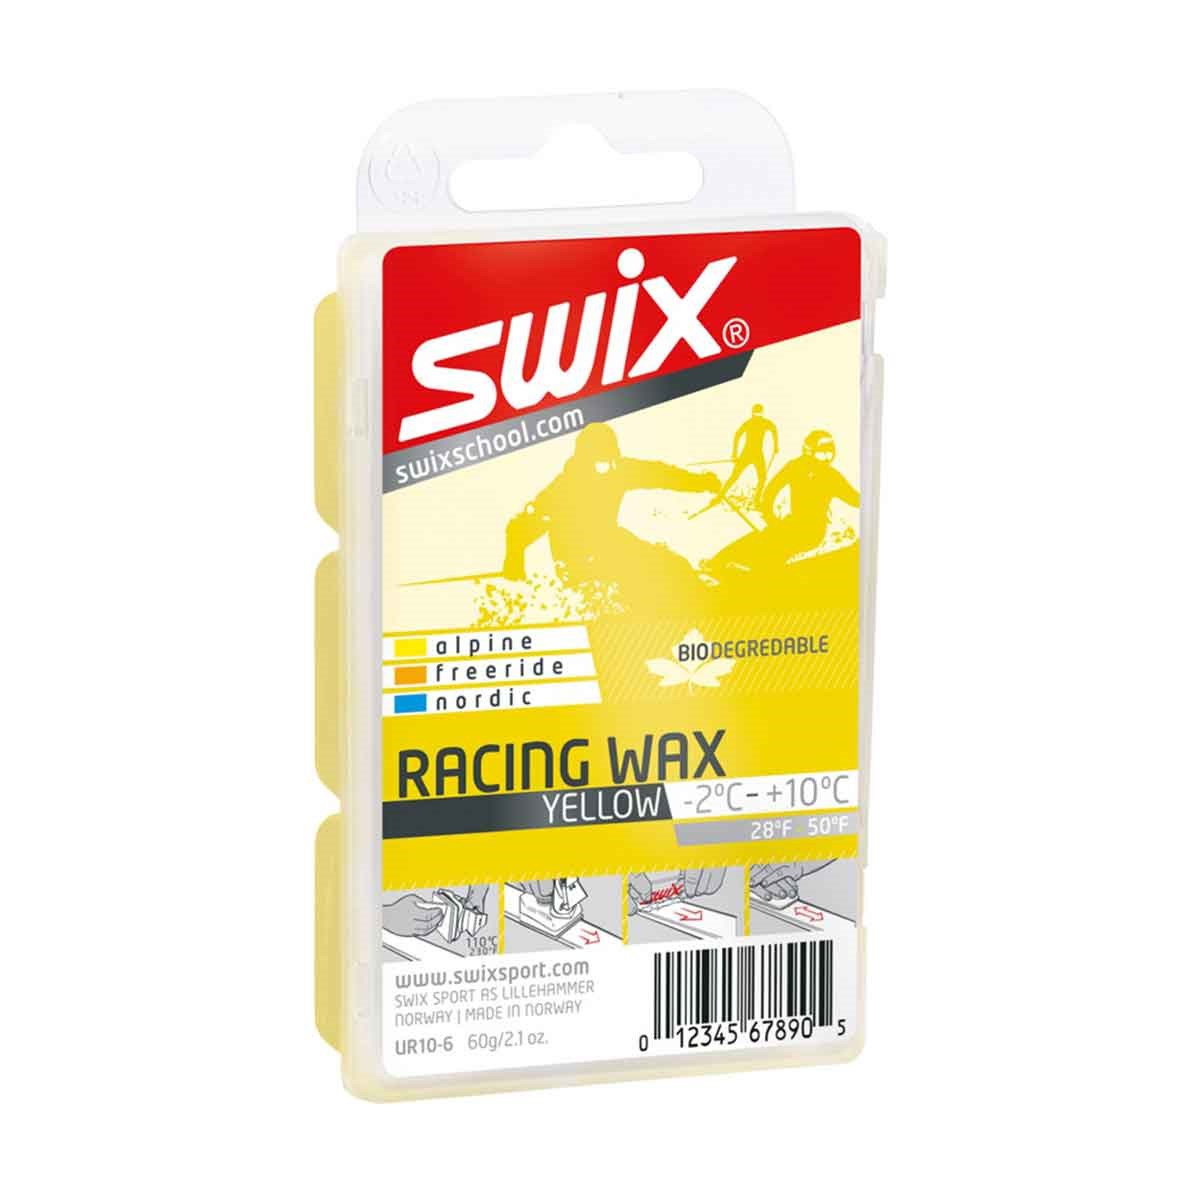 Vosk Swix Racing Wax -2°C/+10°C 60g yelllow Swix 10015836 L-11